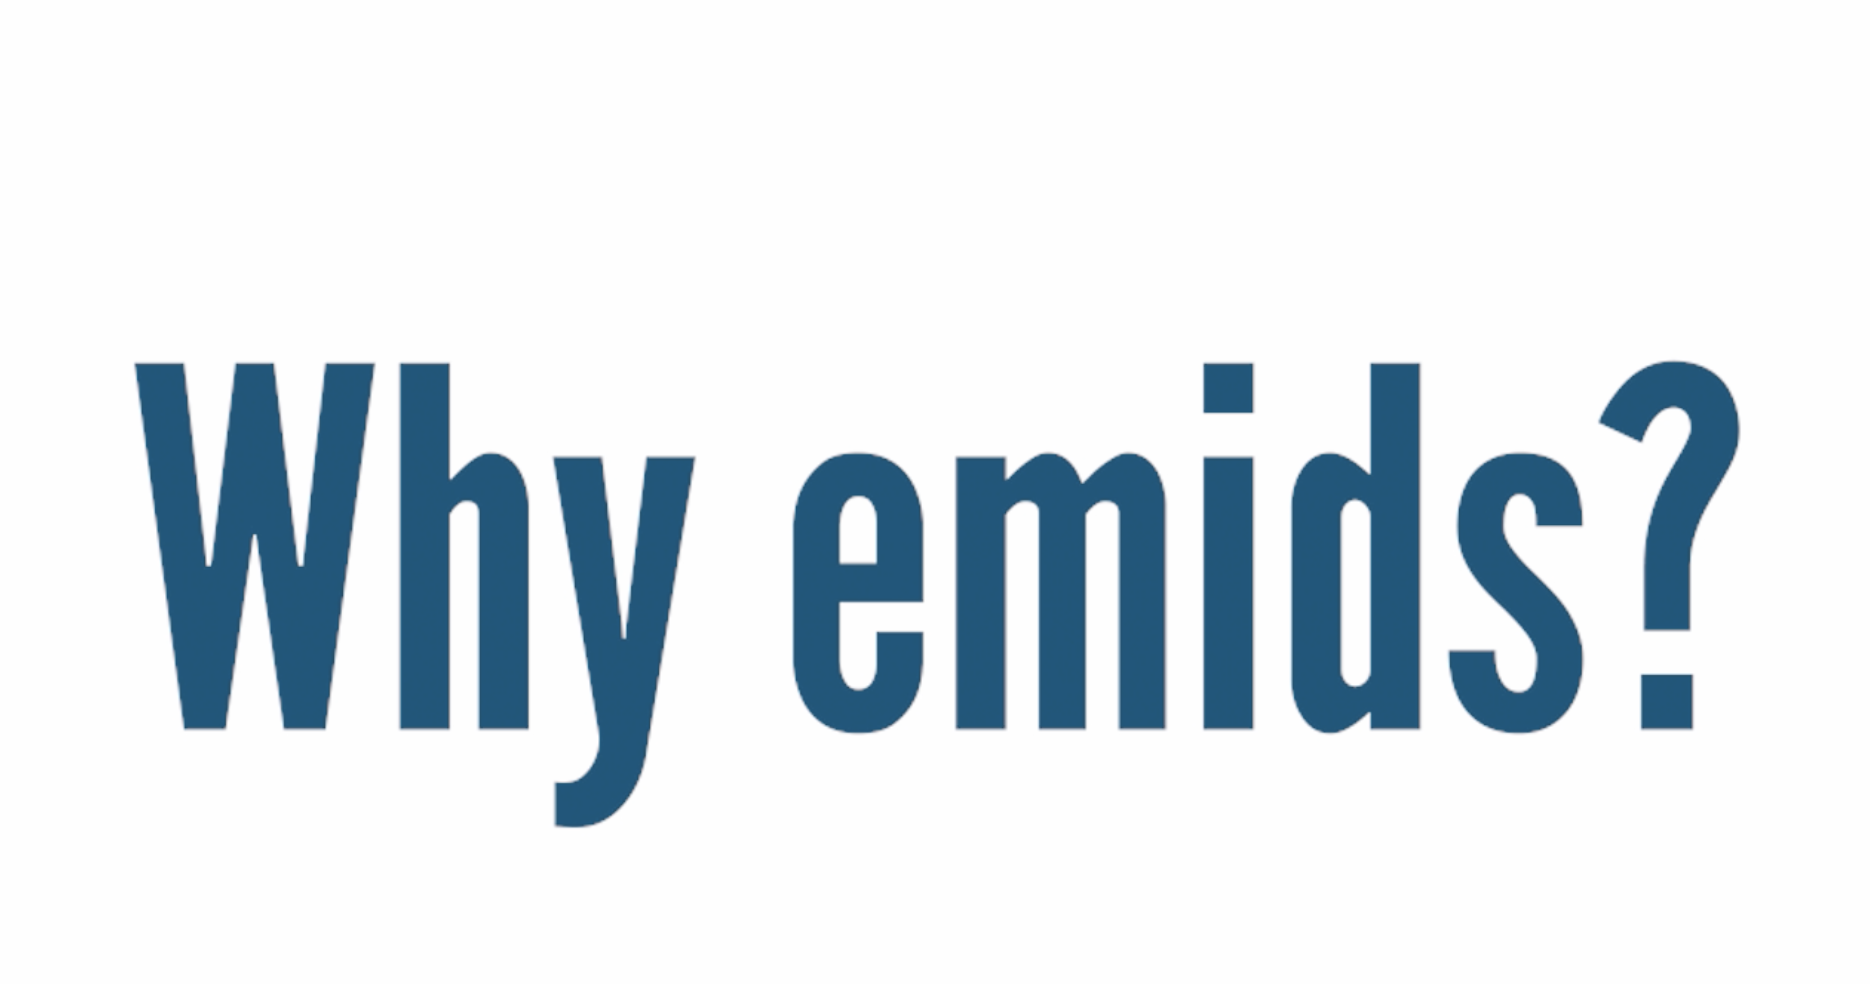 Emids healthcare summit